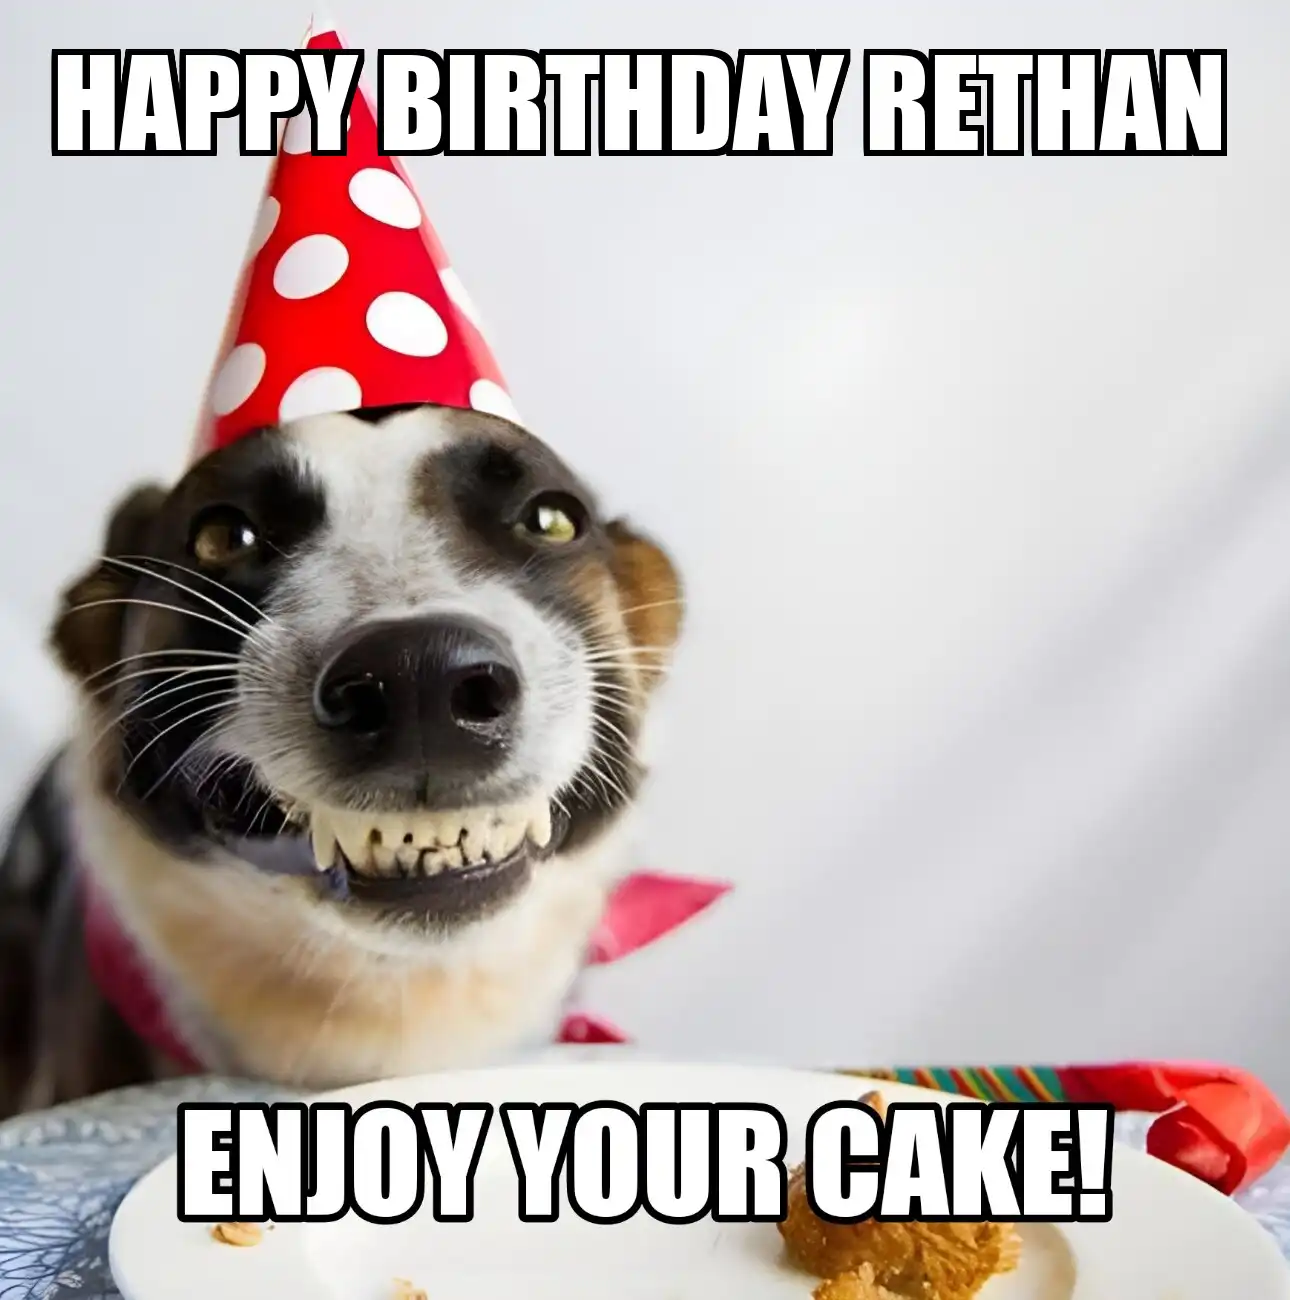 Happy Birthday Rethan Enjoy Your Cake Dog Meme